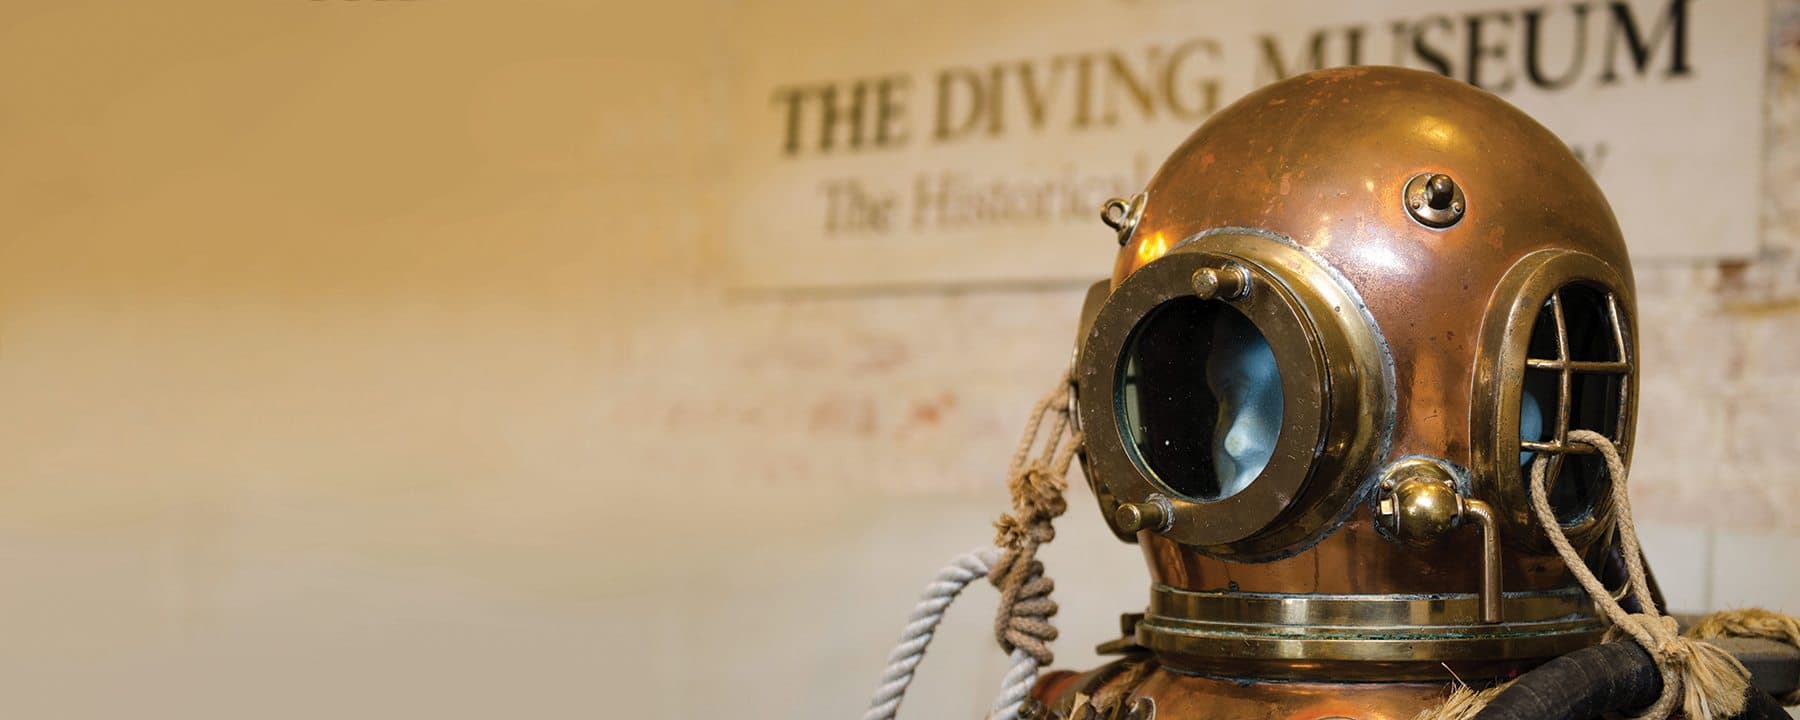 Muzeum nurkowania diving museum 21